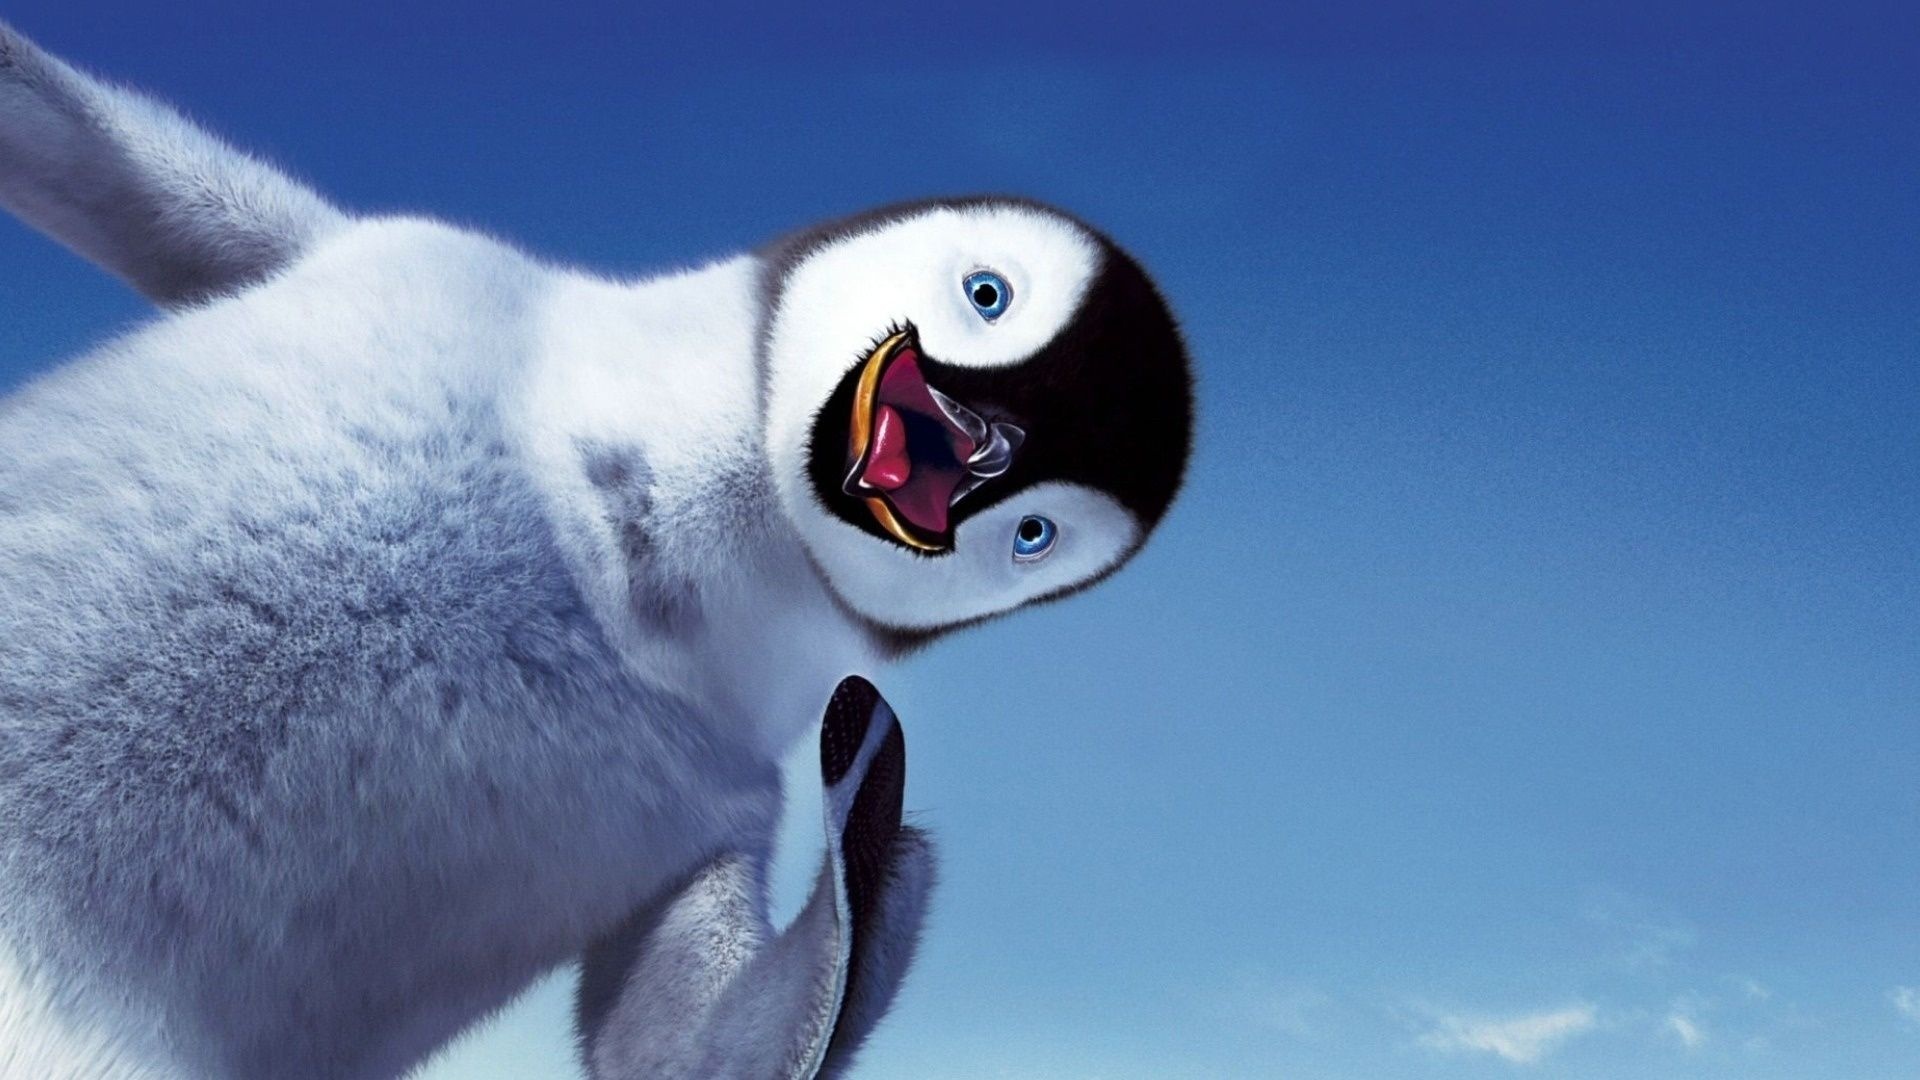 Penguin wallpapers, Cute penguins, Arctic animals, 1920x1080 Full HD Desktop